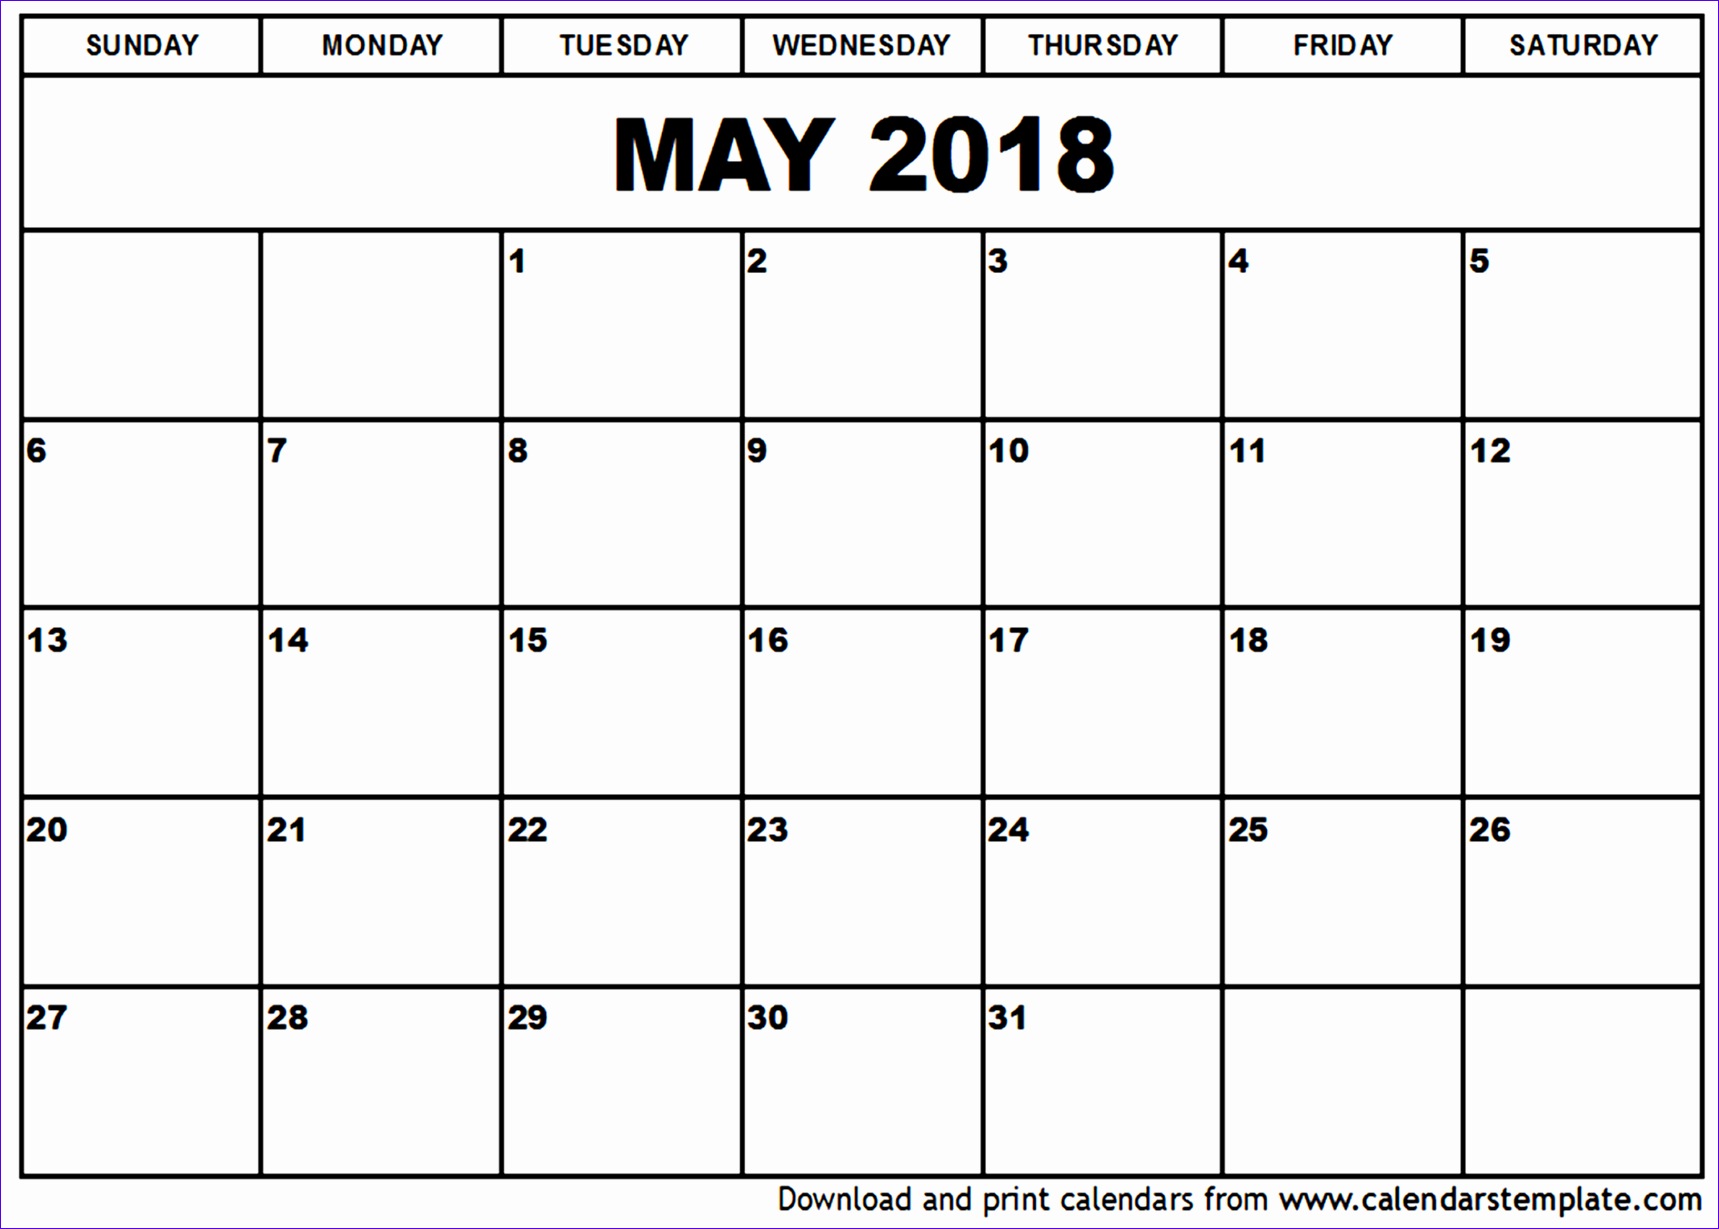 may 2018 calendar template 1685 17191229